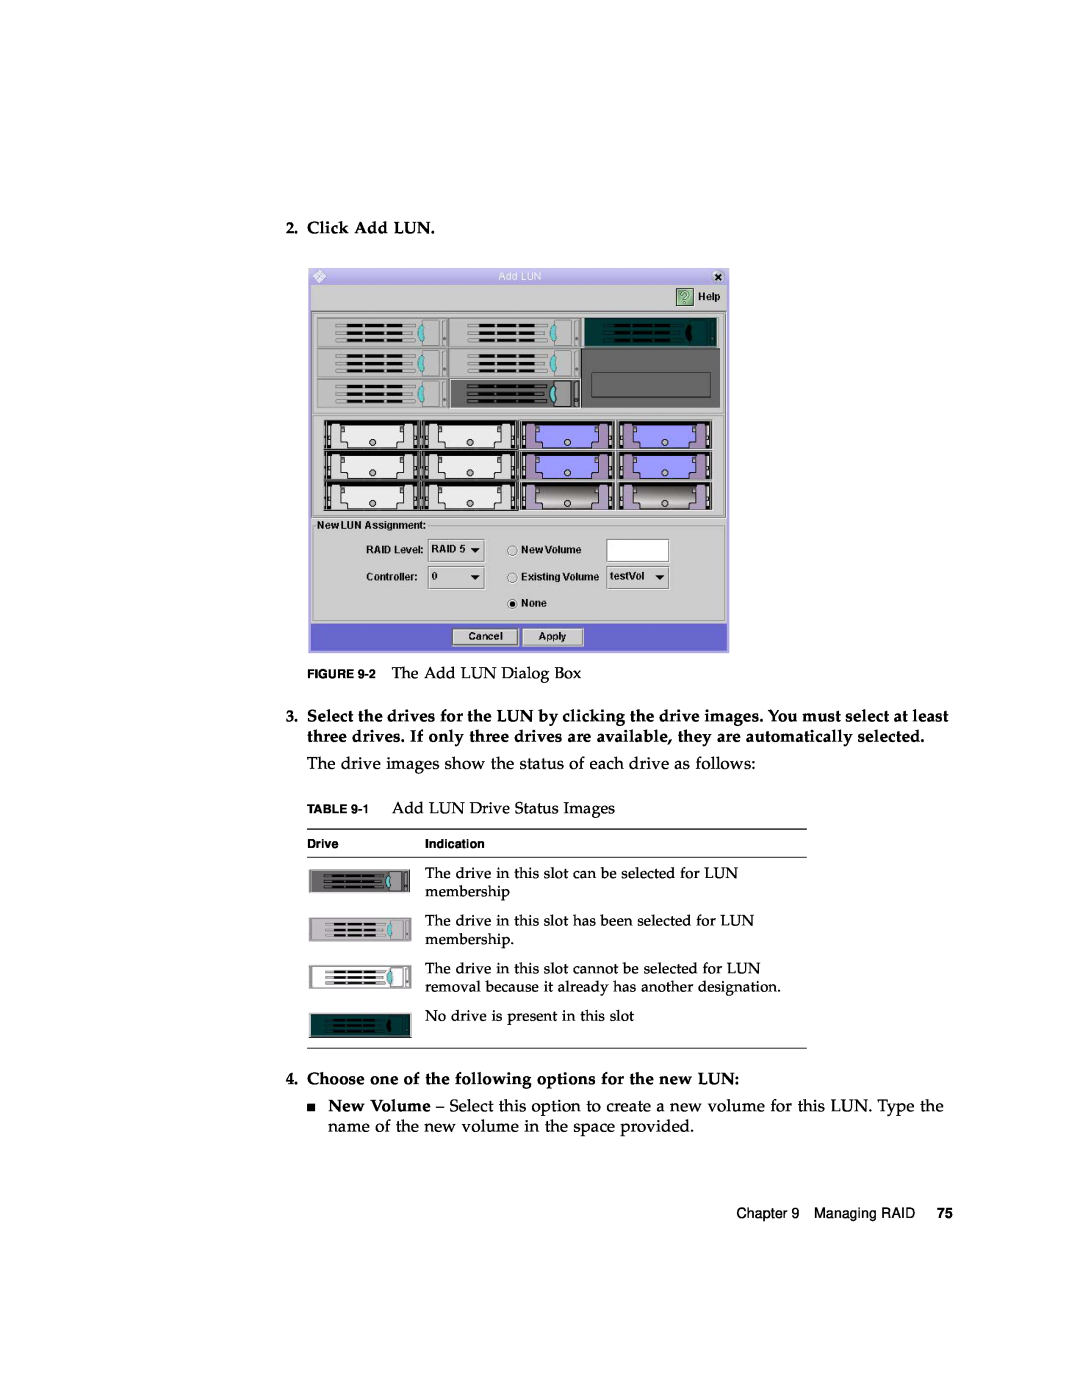 Sun Microsystems 5210 NAS manual Click Add LUN 